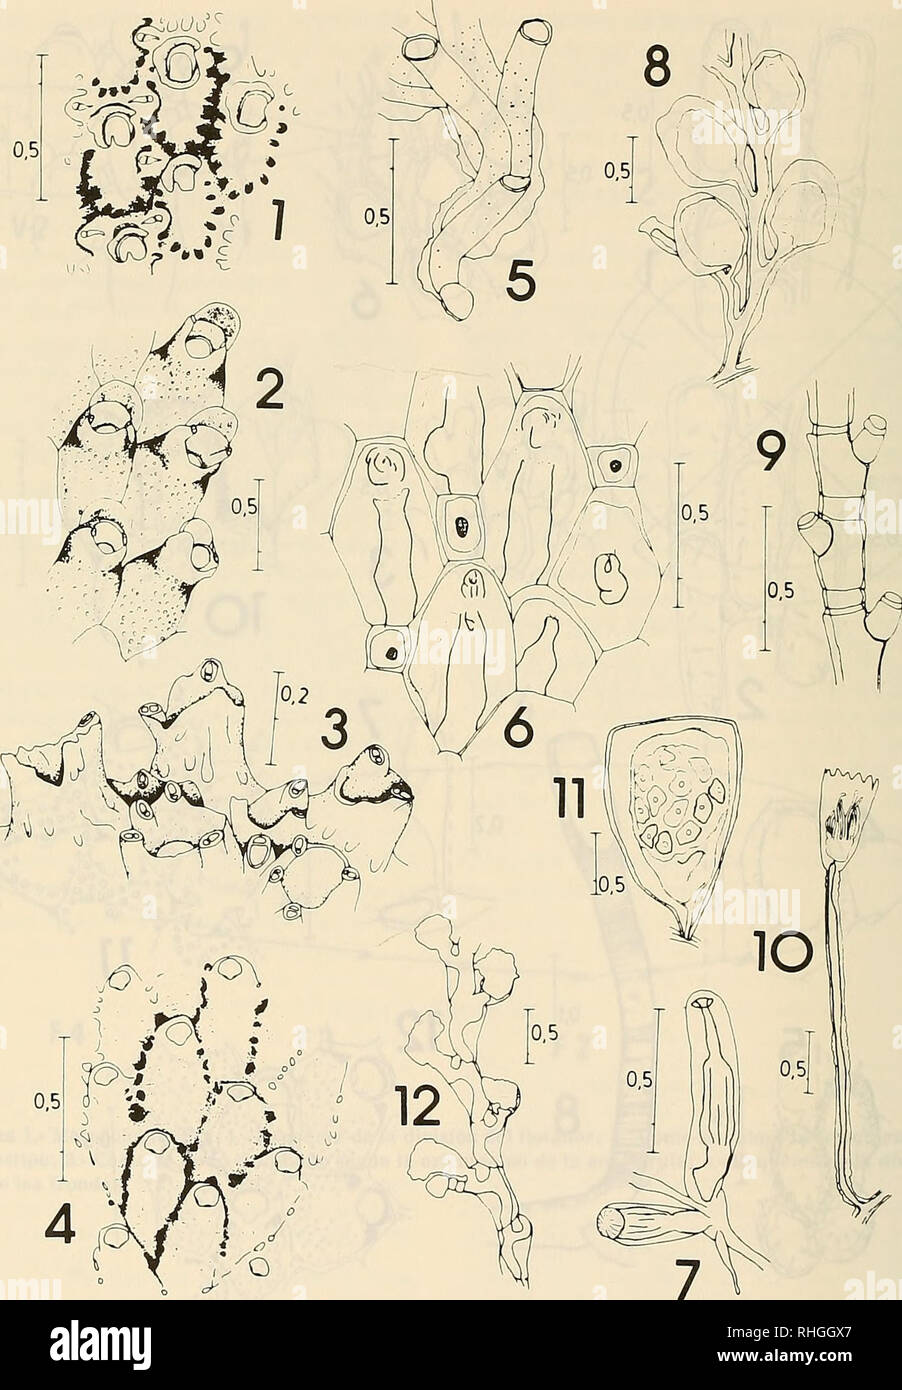 . Boletin de la Sociedad de Biología de Concepción. Sociedad de Biología de Concepción; Biology; Biology. Bol. Soc. Biol. Concepción, Chile. Tomo 59, 1988. Lámina 3.- Fig. 1.- Umbonula alvareziana; 2.- Lapenicella sp.; 3.- CcUeporiva sp.; 4.- CellcporcUu hyali- na; 5.- Tubulipora sp.; 6.- Alci/onidium polyoum; 7.- Bowerbankia gracilis; 8.- Halecium flexile; 9.- í/«- lecium sp.; 10.- CZj/íia hemysphaerica; 11.- Detalle de una gonoteca de C. hemyspliaeñca; 12.- Laomc- dea geniculata. 128. Please note that these images are extracted from scanned page images that may have been digitally enhanced f Stock Photo